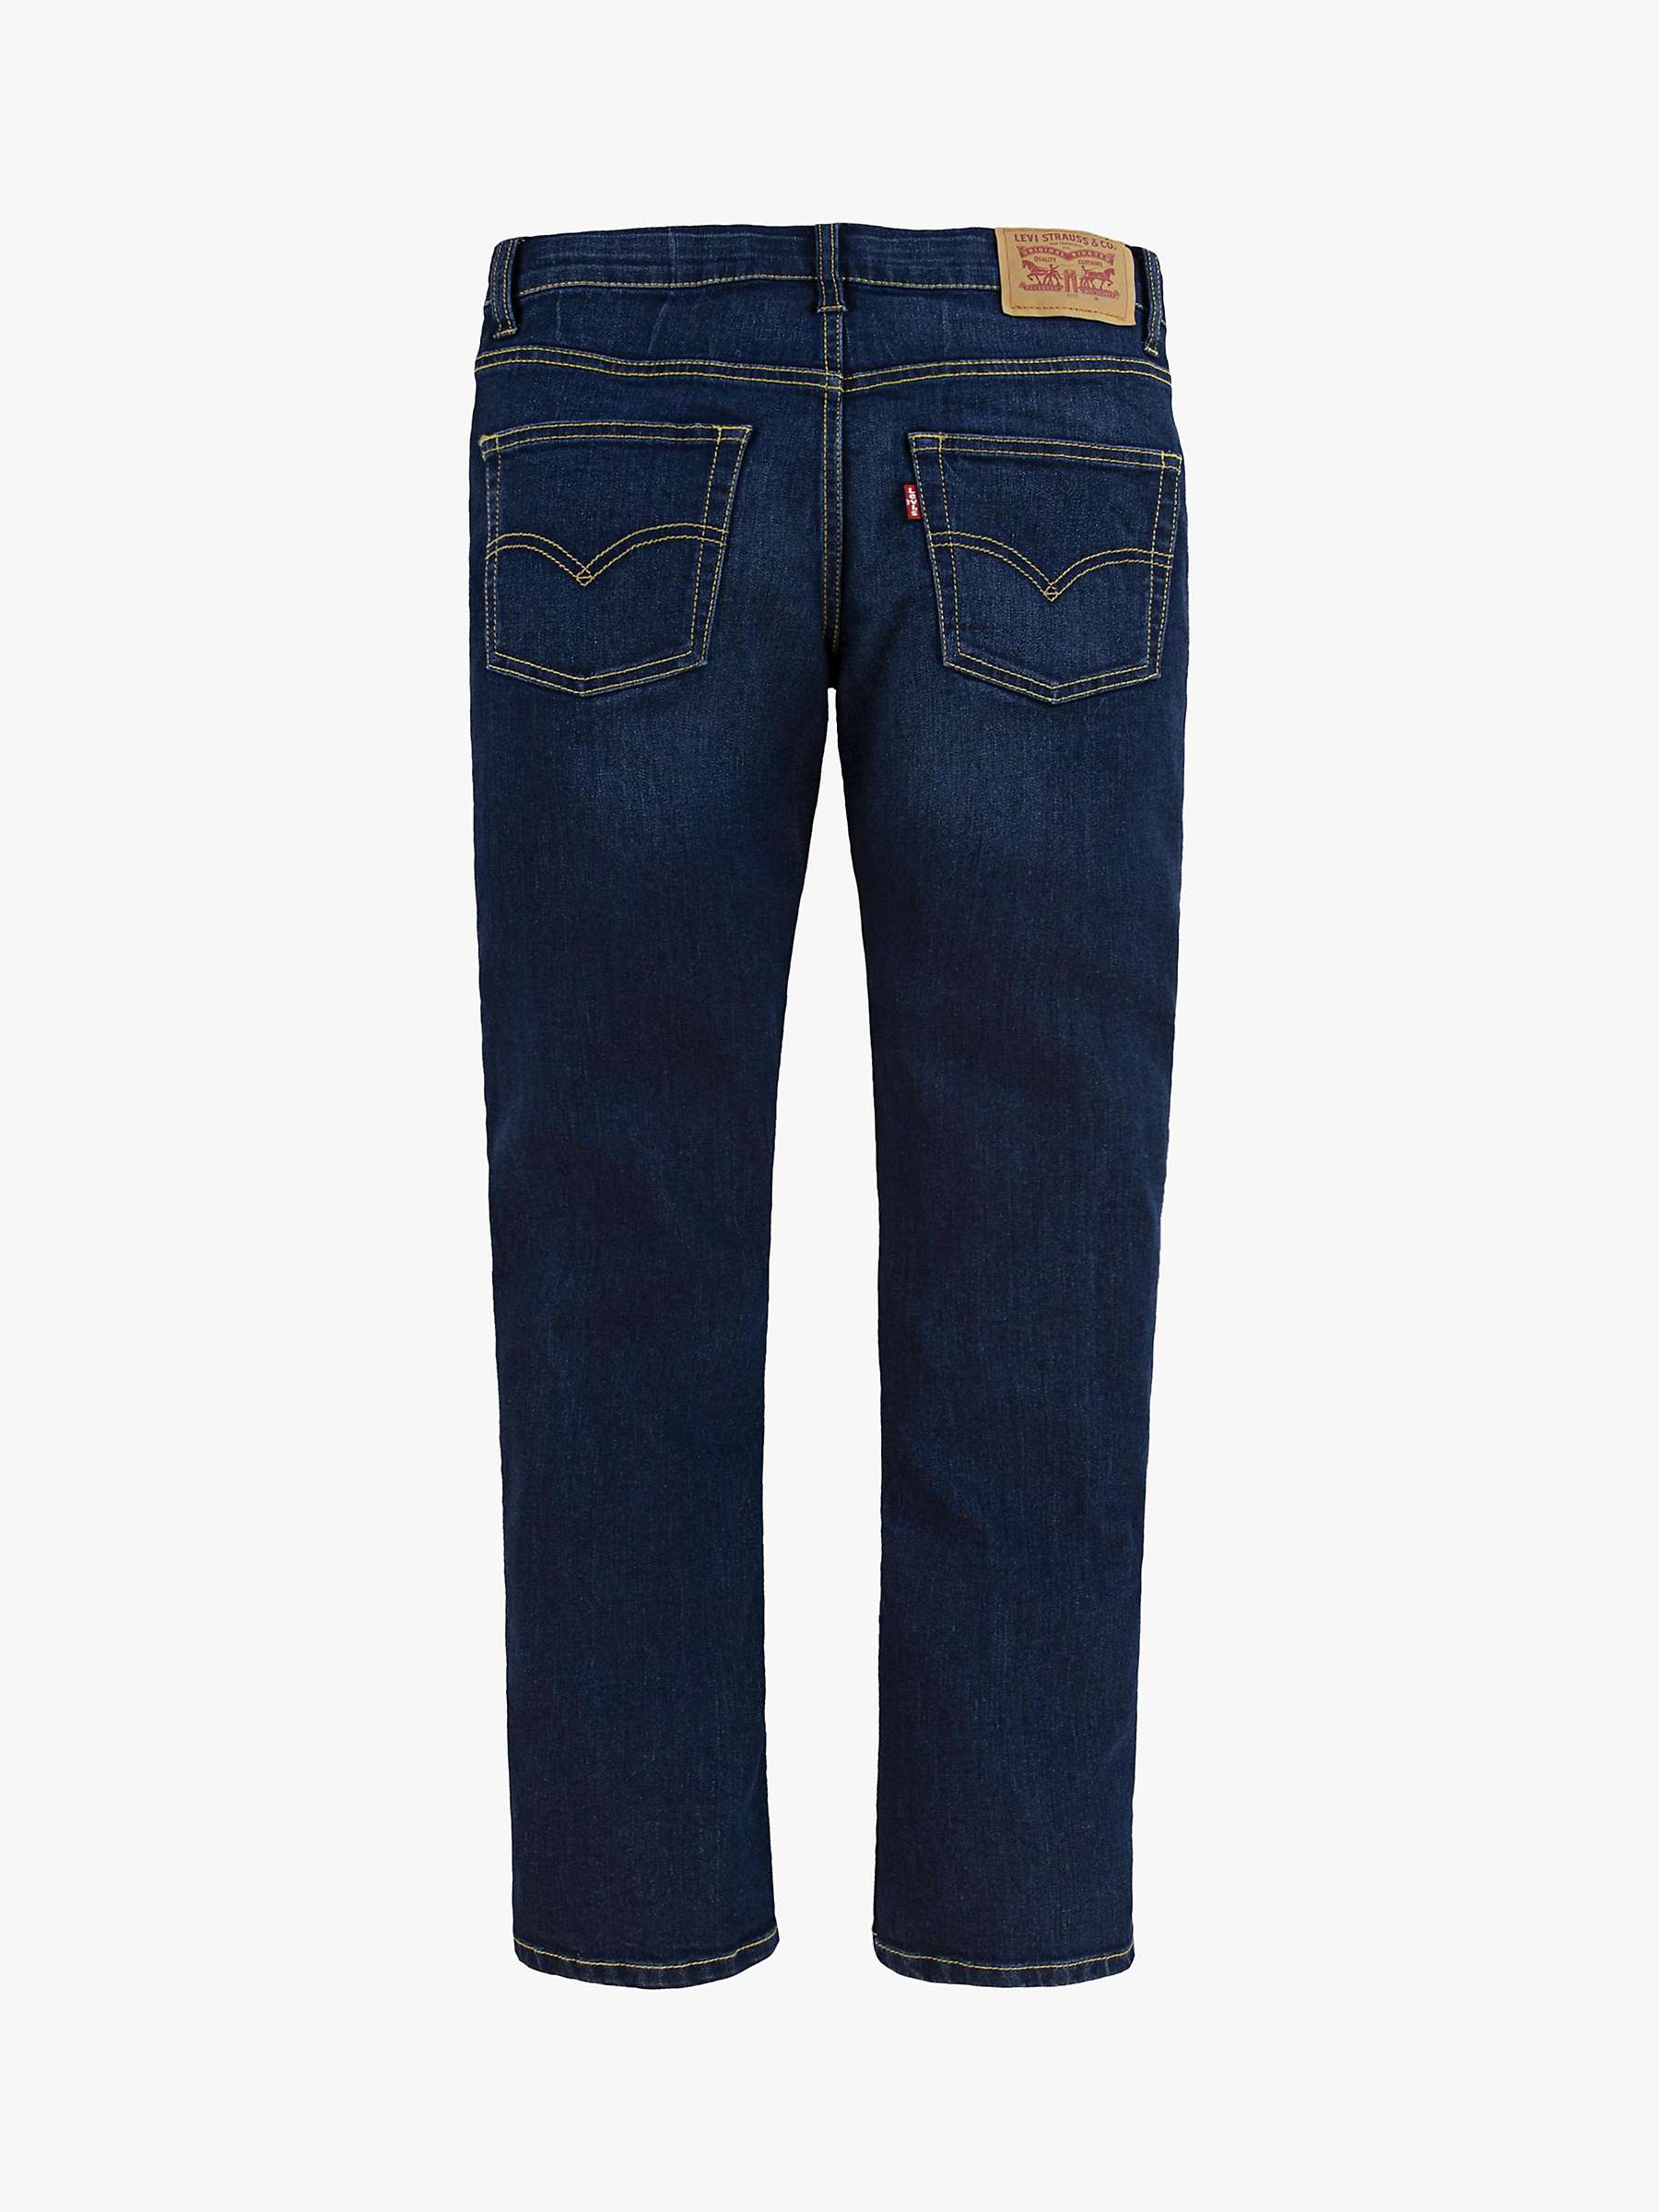 Buy Levi Boys' 511 Slim Fit Jeans Online at johnlewis.com